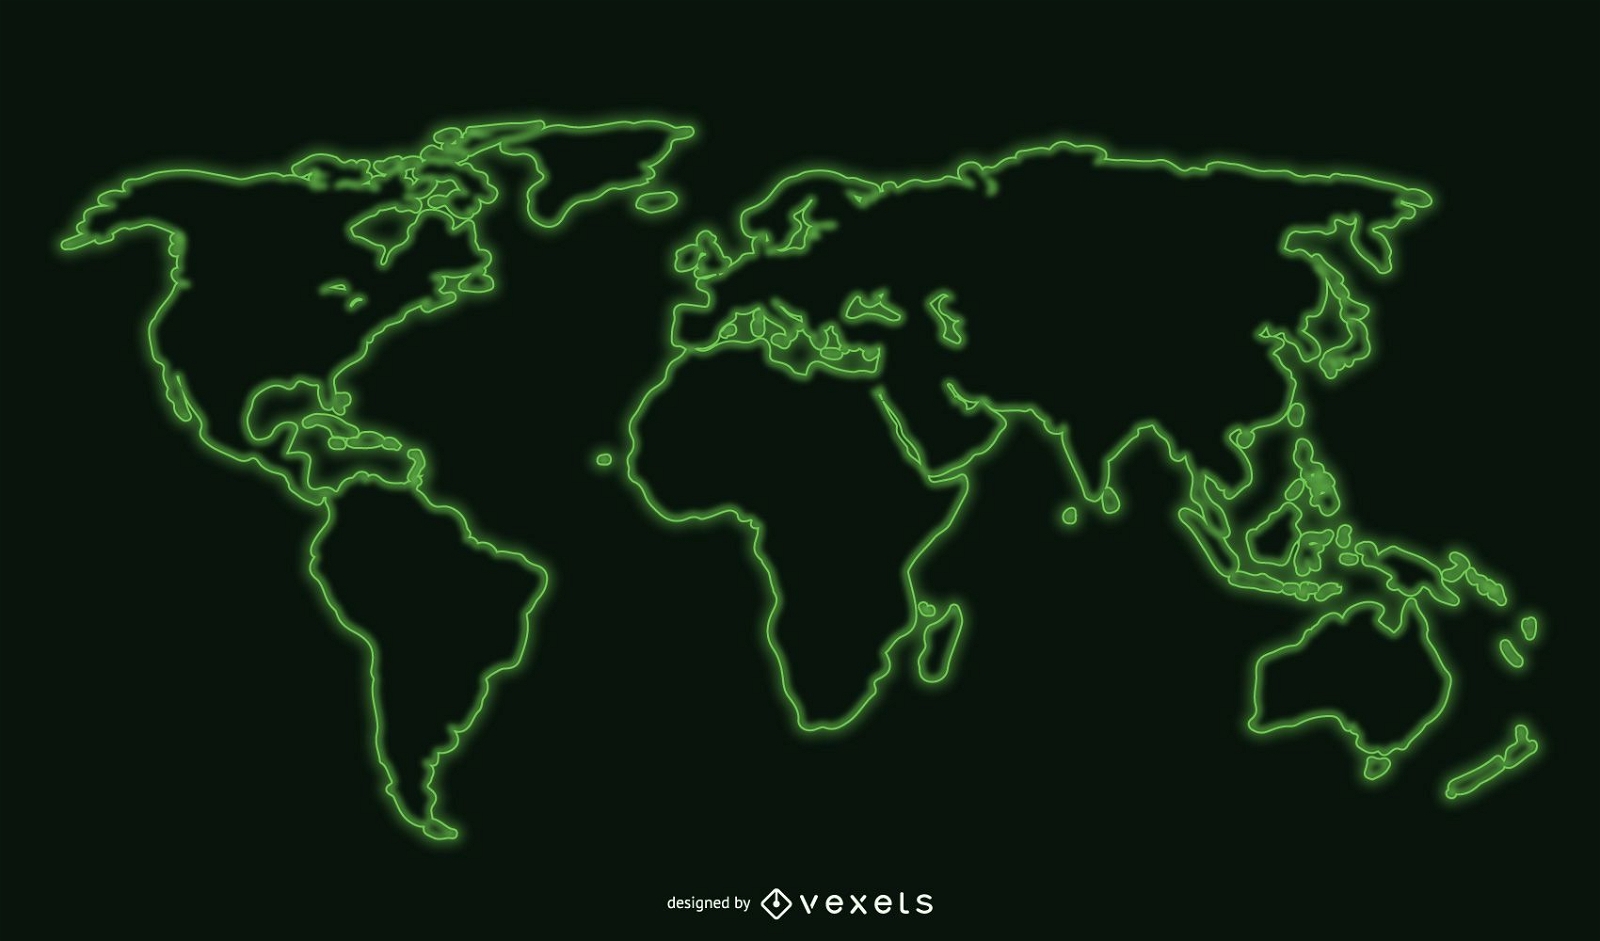 cool world map desktop background